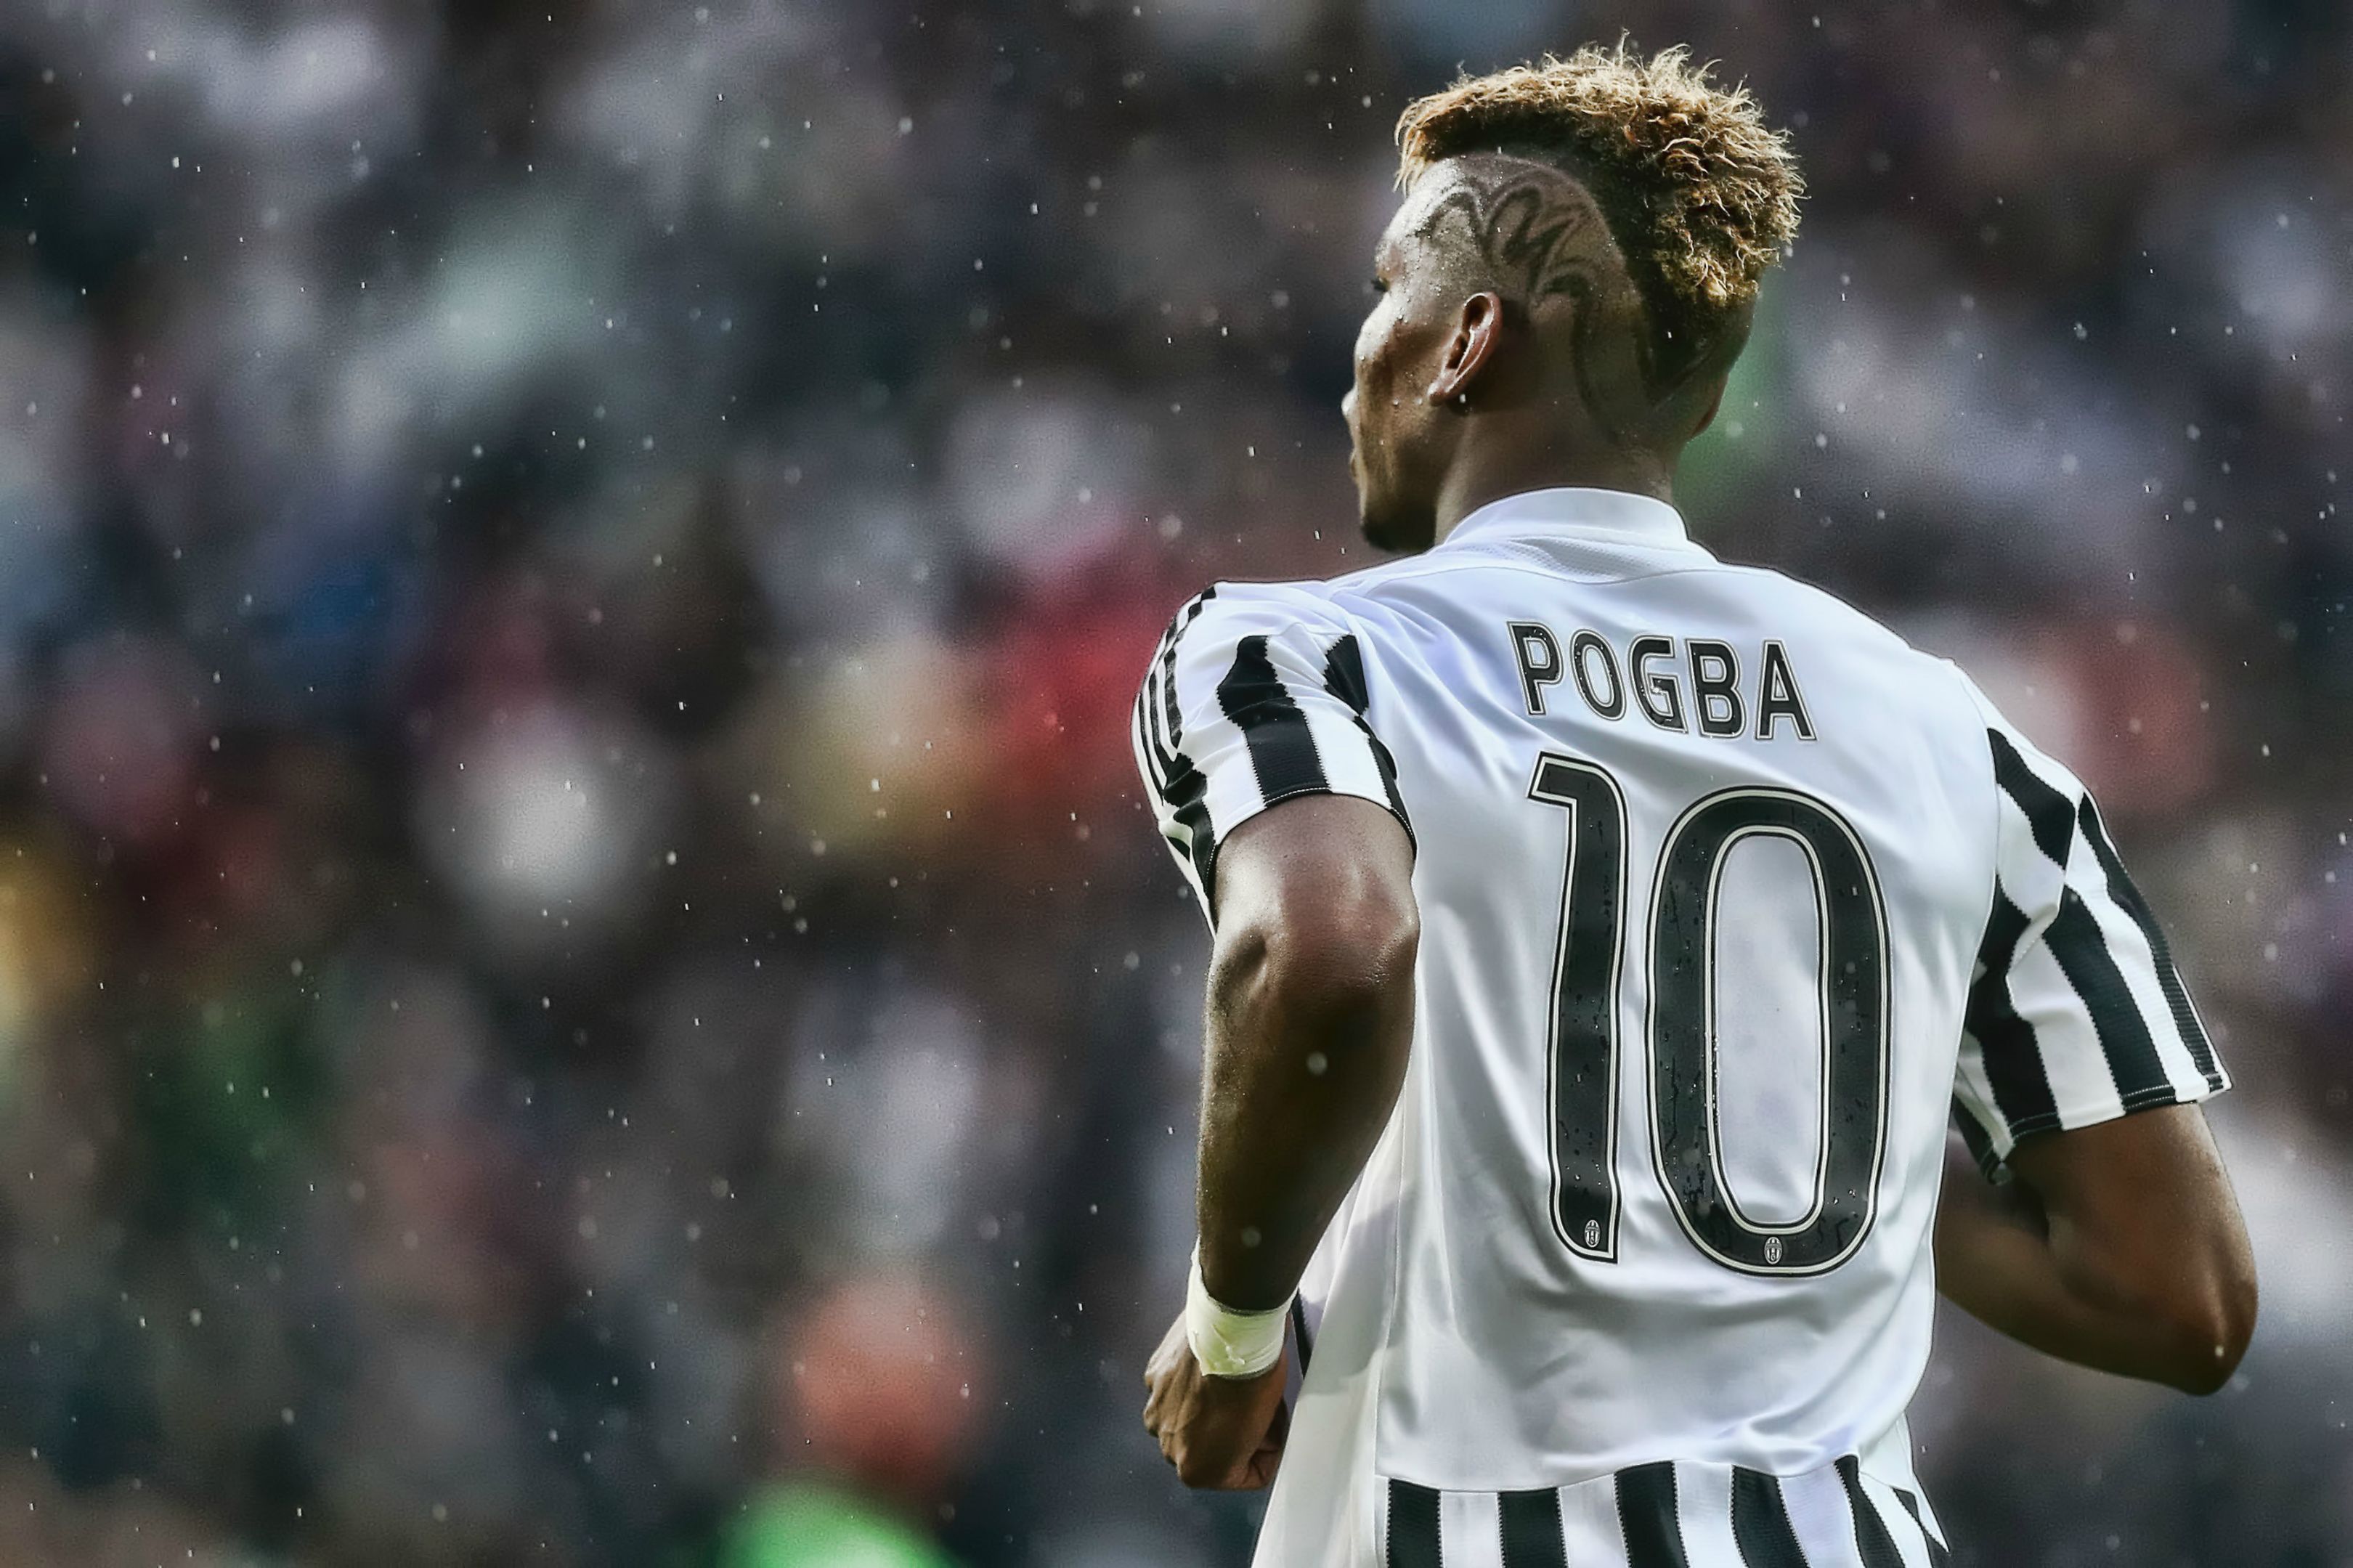 Pogba Juventus 10 , HD Wallpaper & Backgrounds